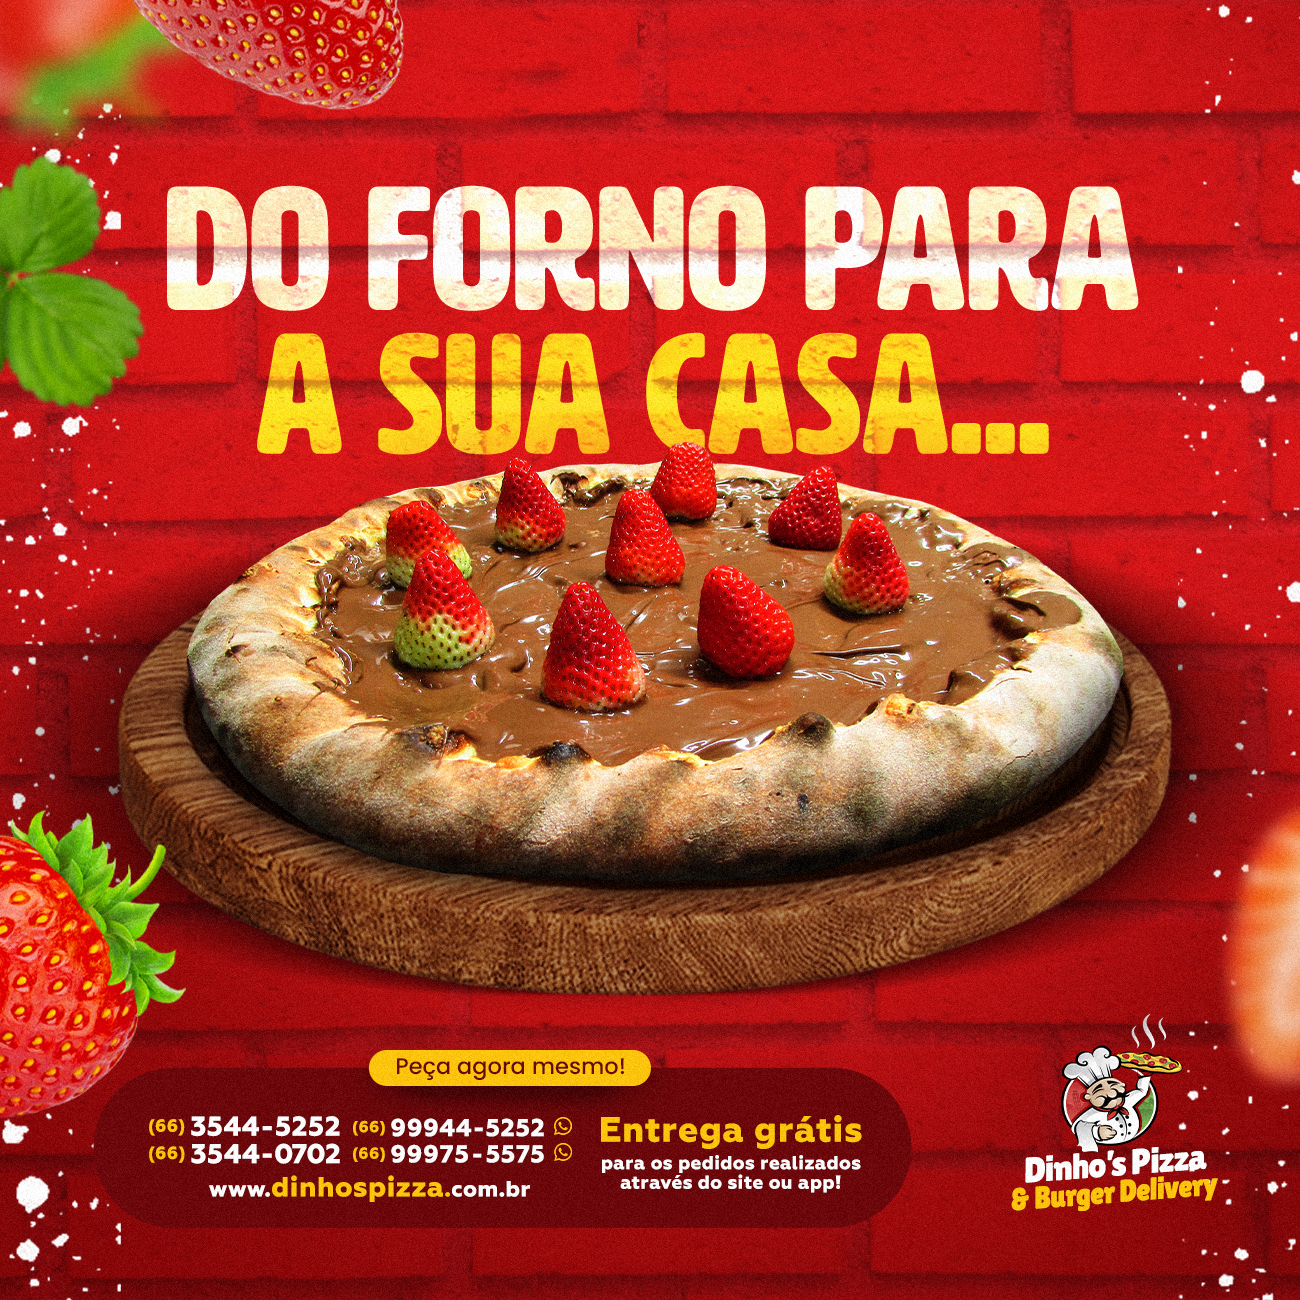 Dinhos Pizza - Abr23 - Post 01